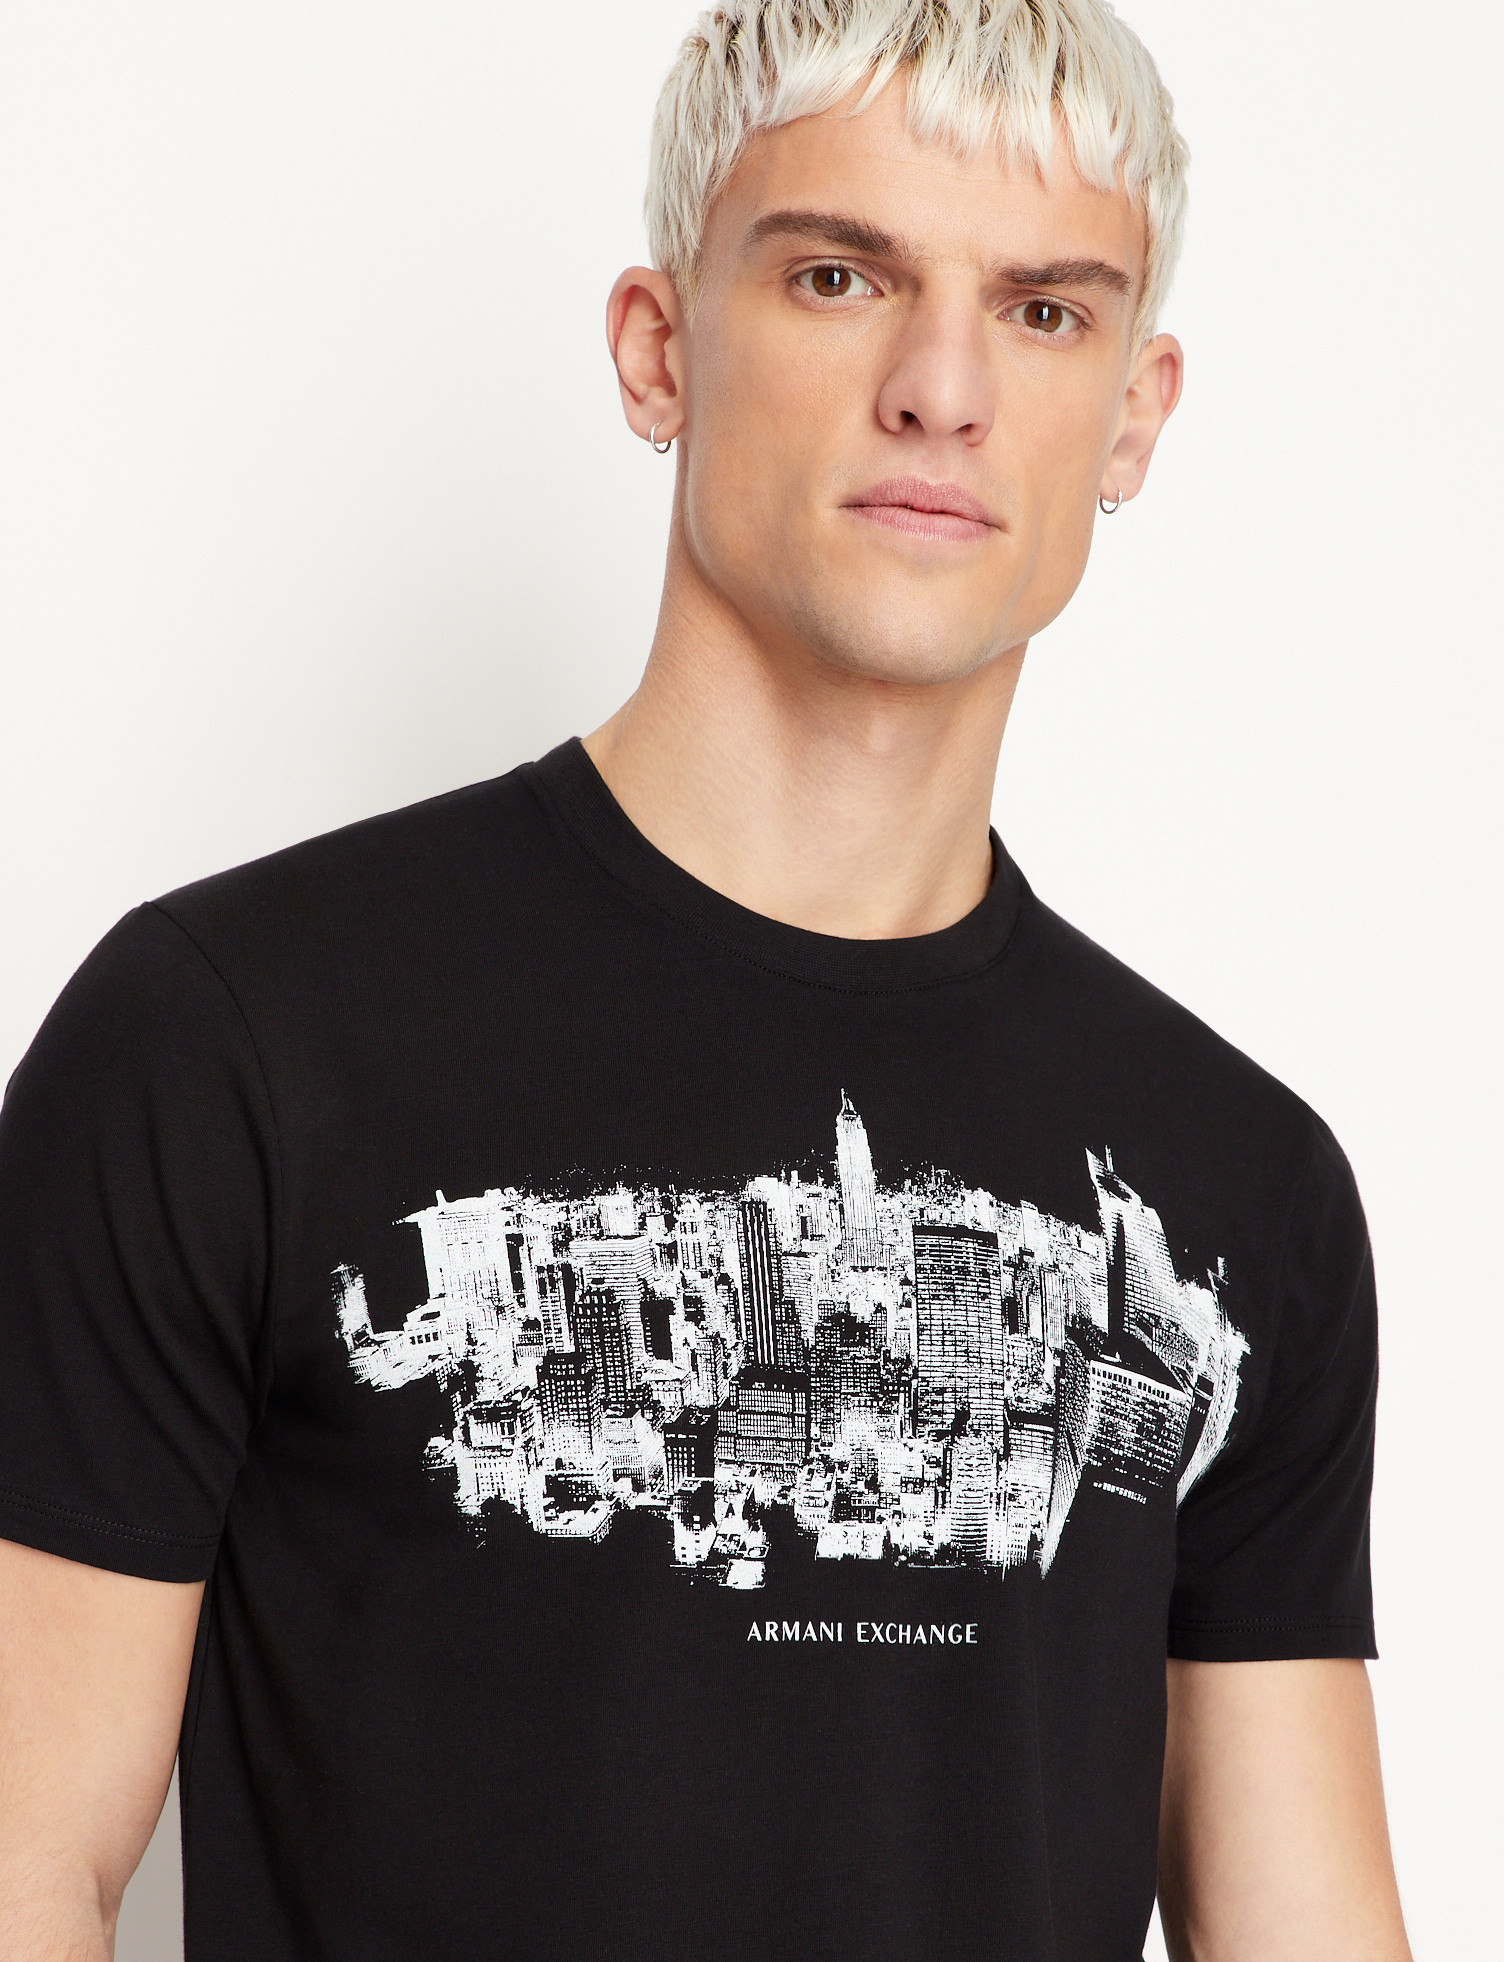 Armani Exchange - Slim fit printed T-shirt, Black, large image number 3